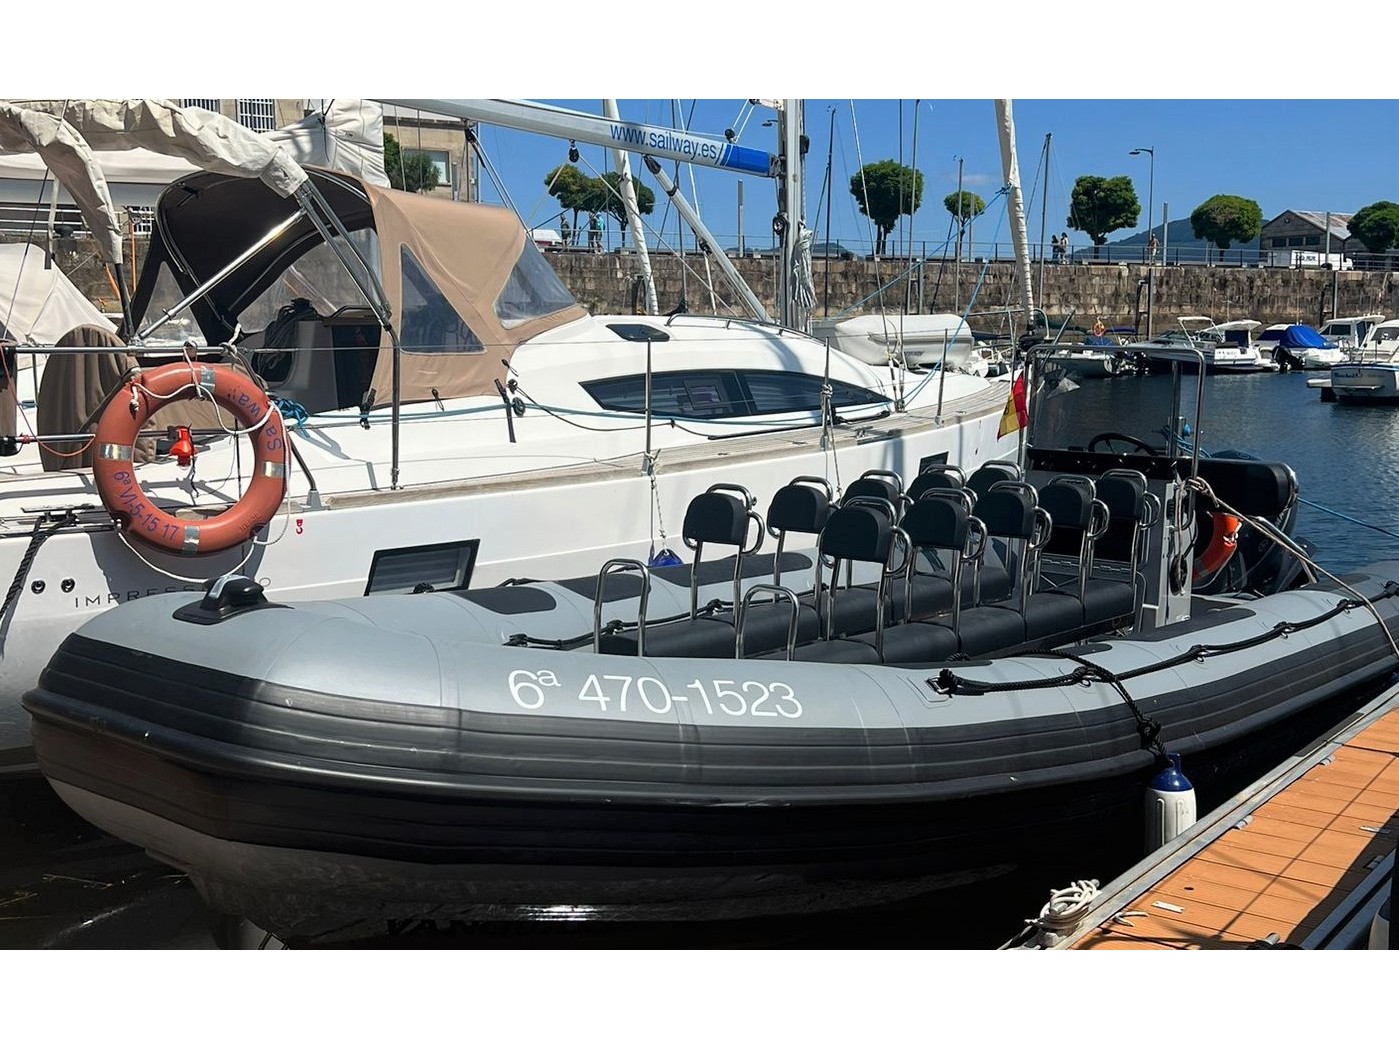 Vanguard DR-760 - Yacht Charter Pontevedra & Boat hire in Spain Galicia Pontevedra Real Club Nautico de Vigo 1